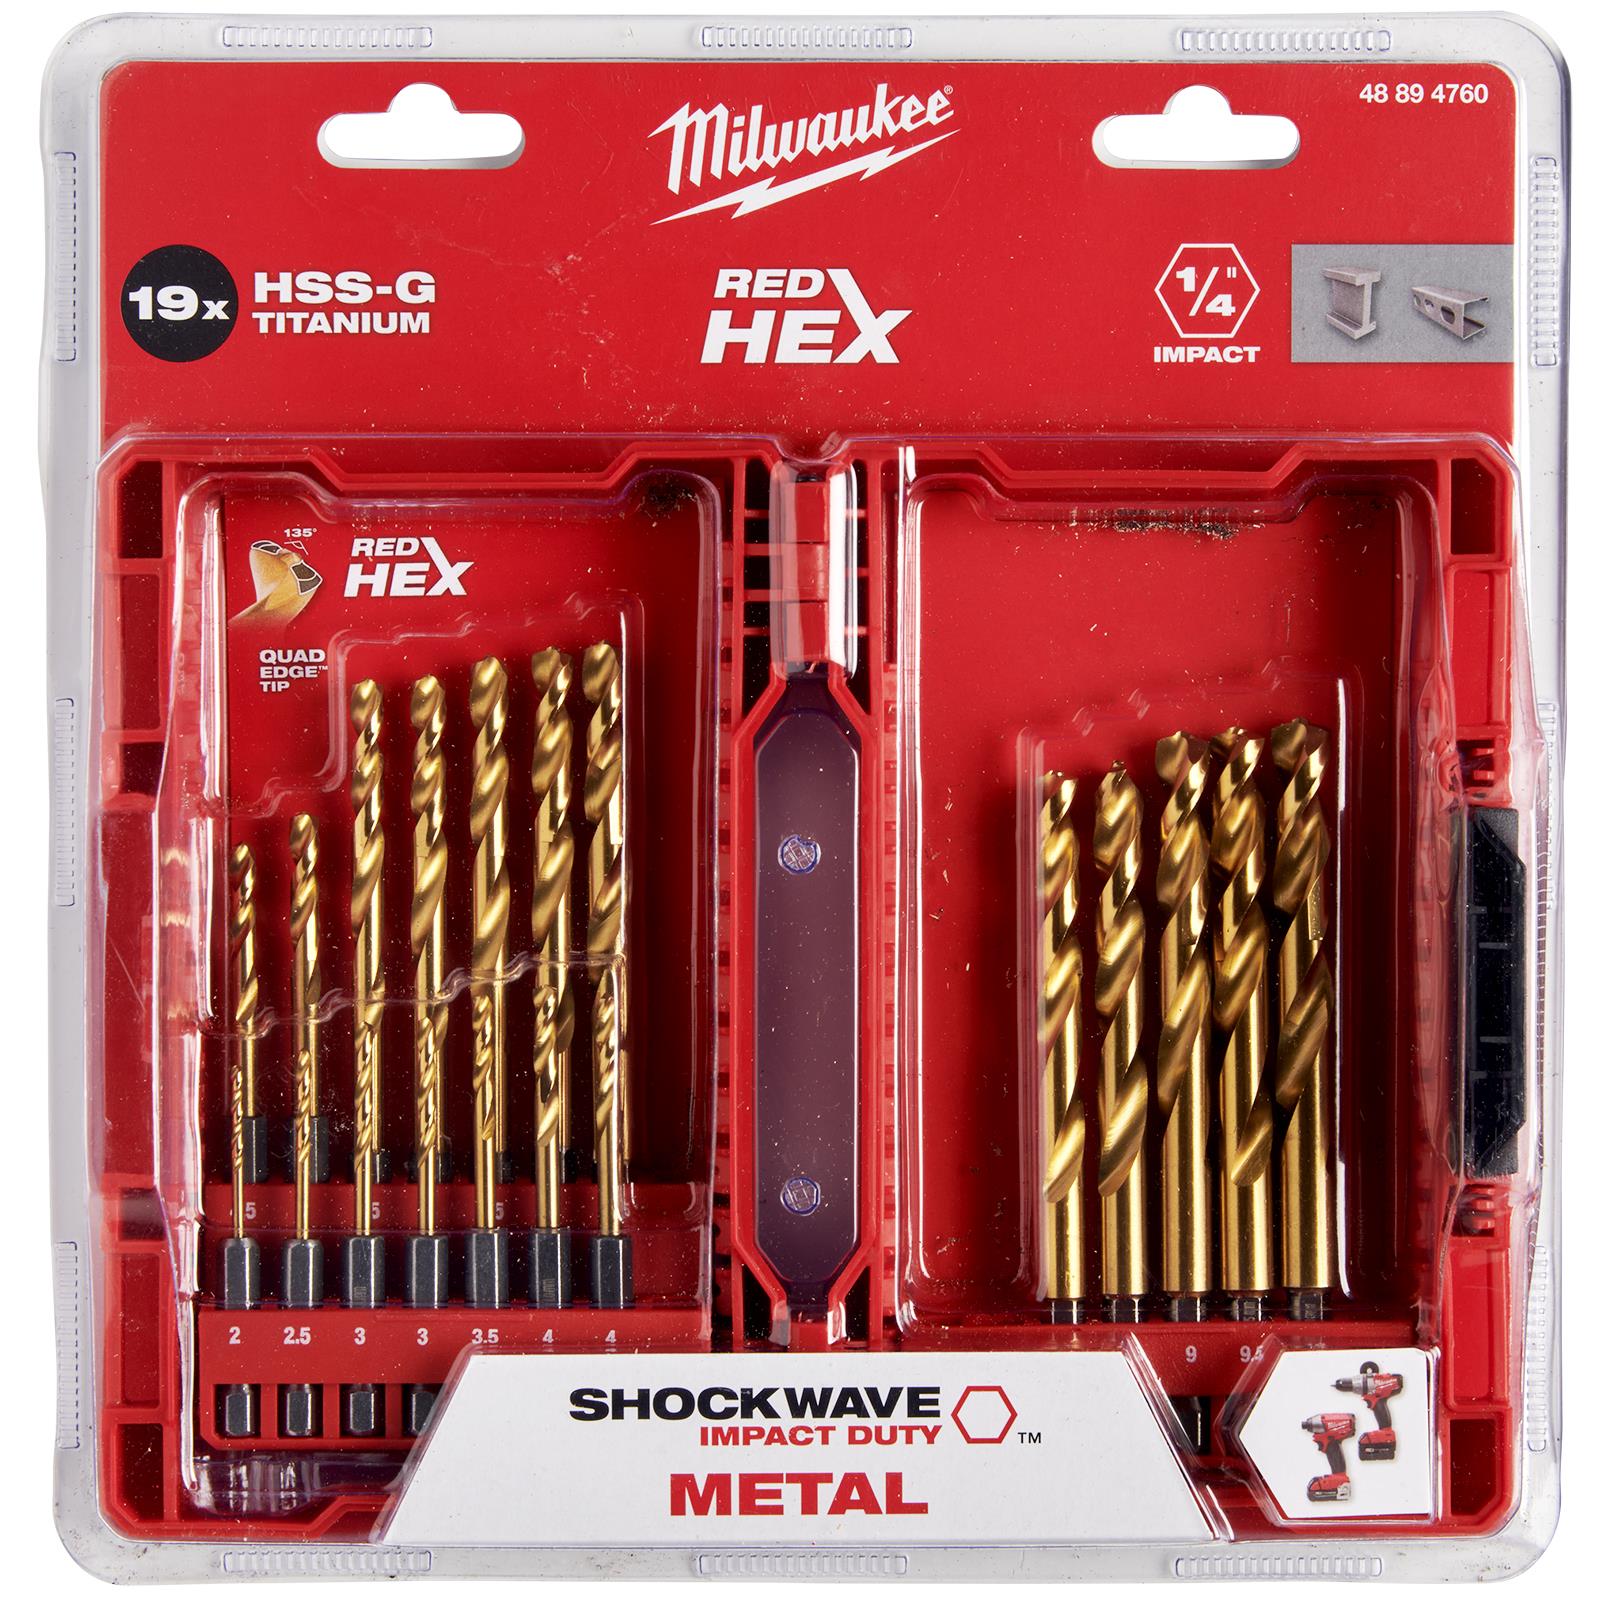 Milwaukee Red Hex Metal Drill Bit Set 19 Piece Shockwave Impact Duty 2-10mm